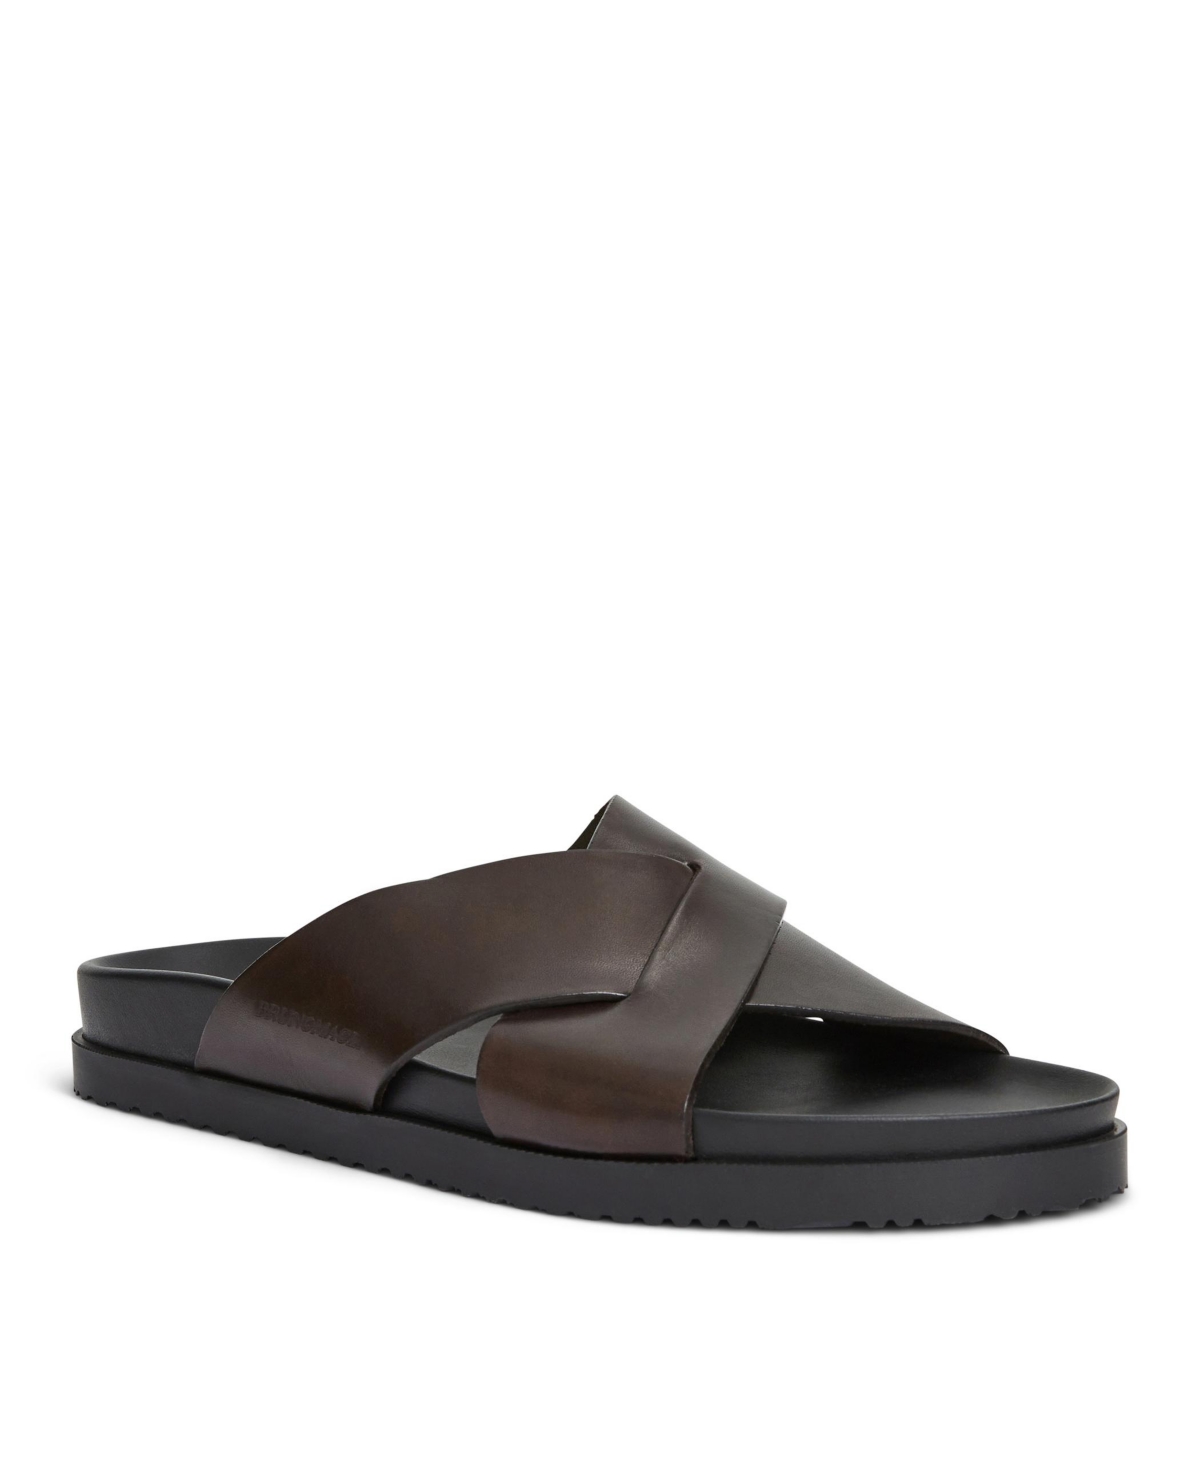 Men's Bologna Leather Crisscross Sandals - Dark Brown